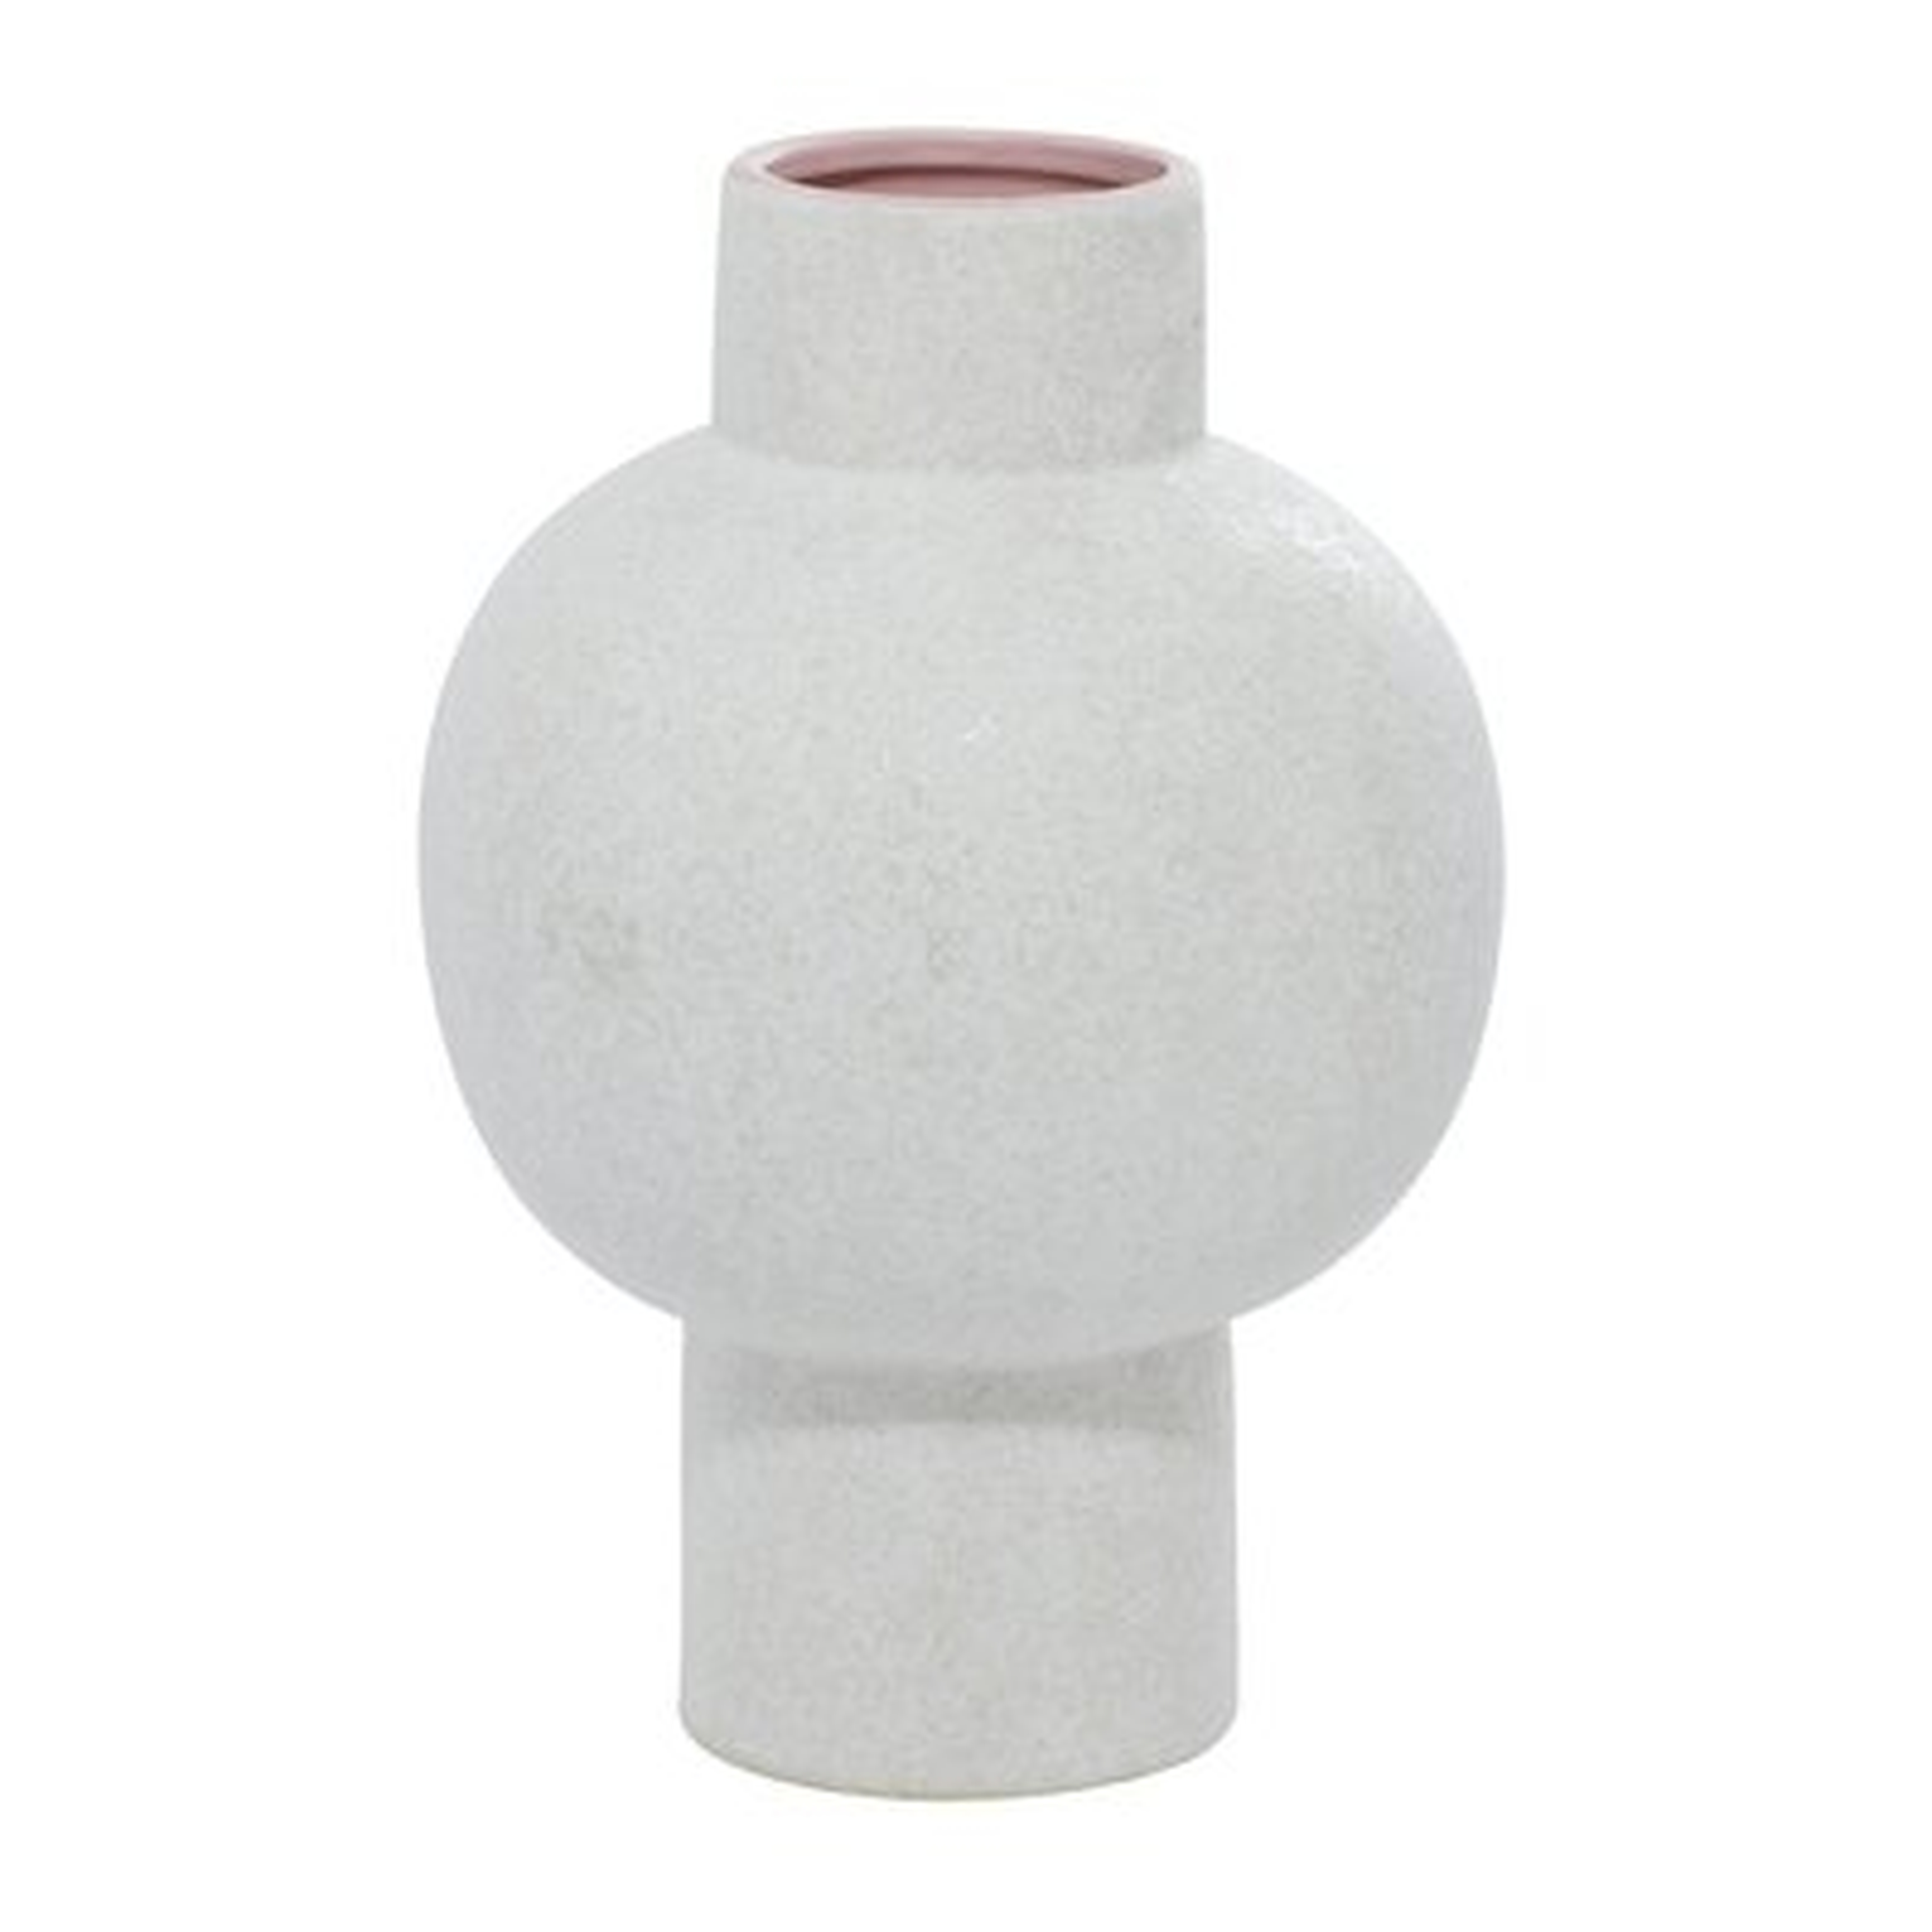 Umut White Ceramic Table Vase, Set of 2 - Wayfair